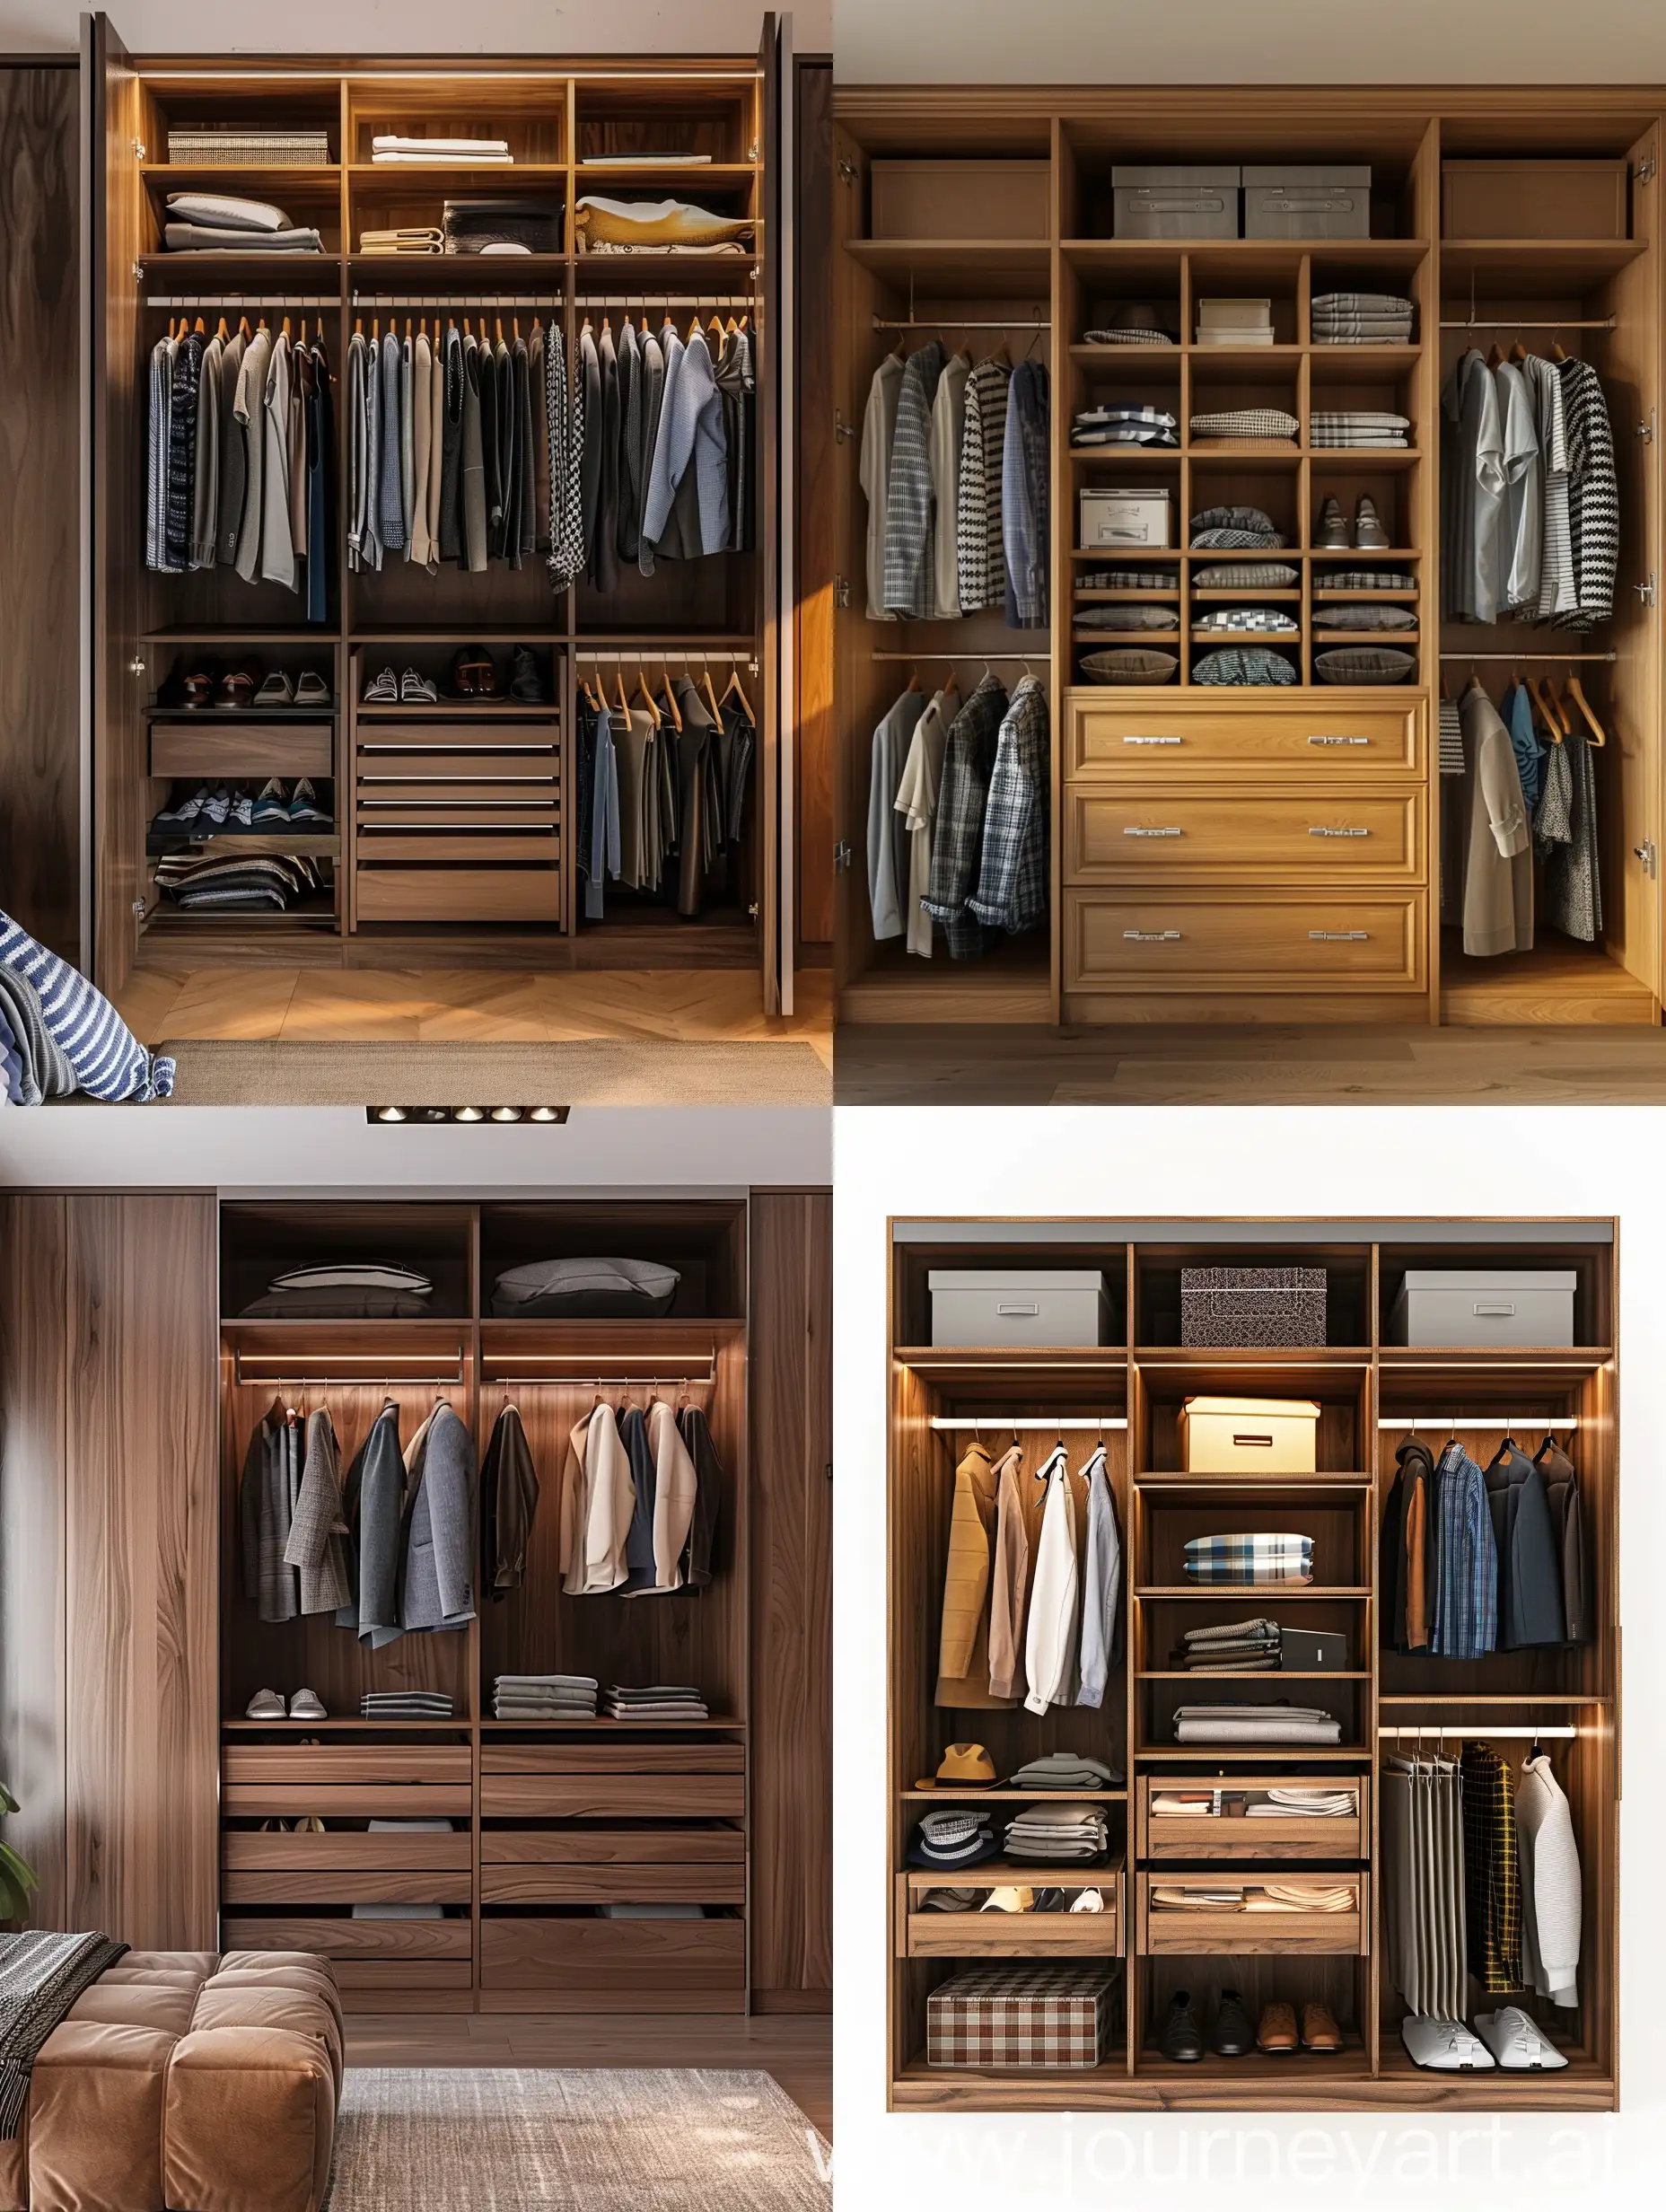 Create a perfect wardrobe interior design/blueprint that has dimension of 82x20x89 inch